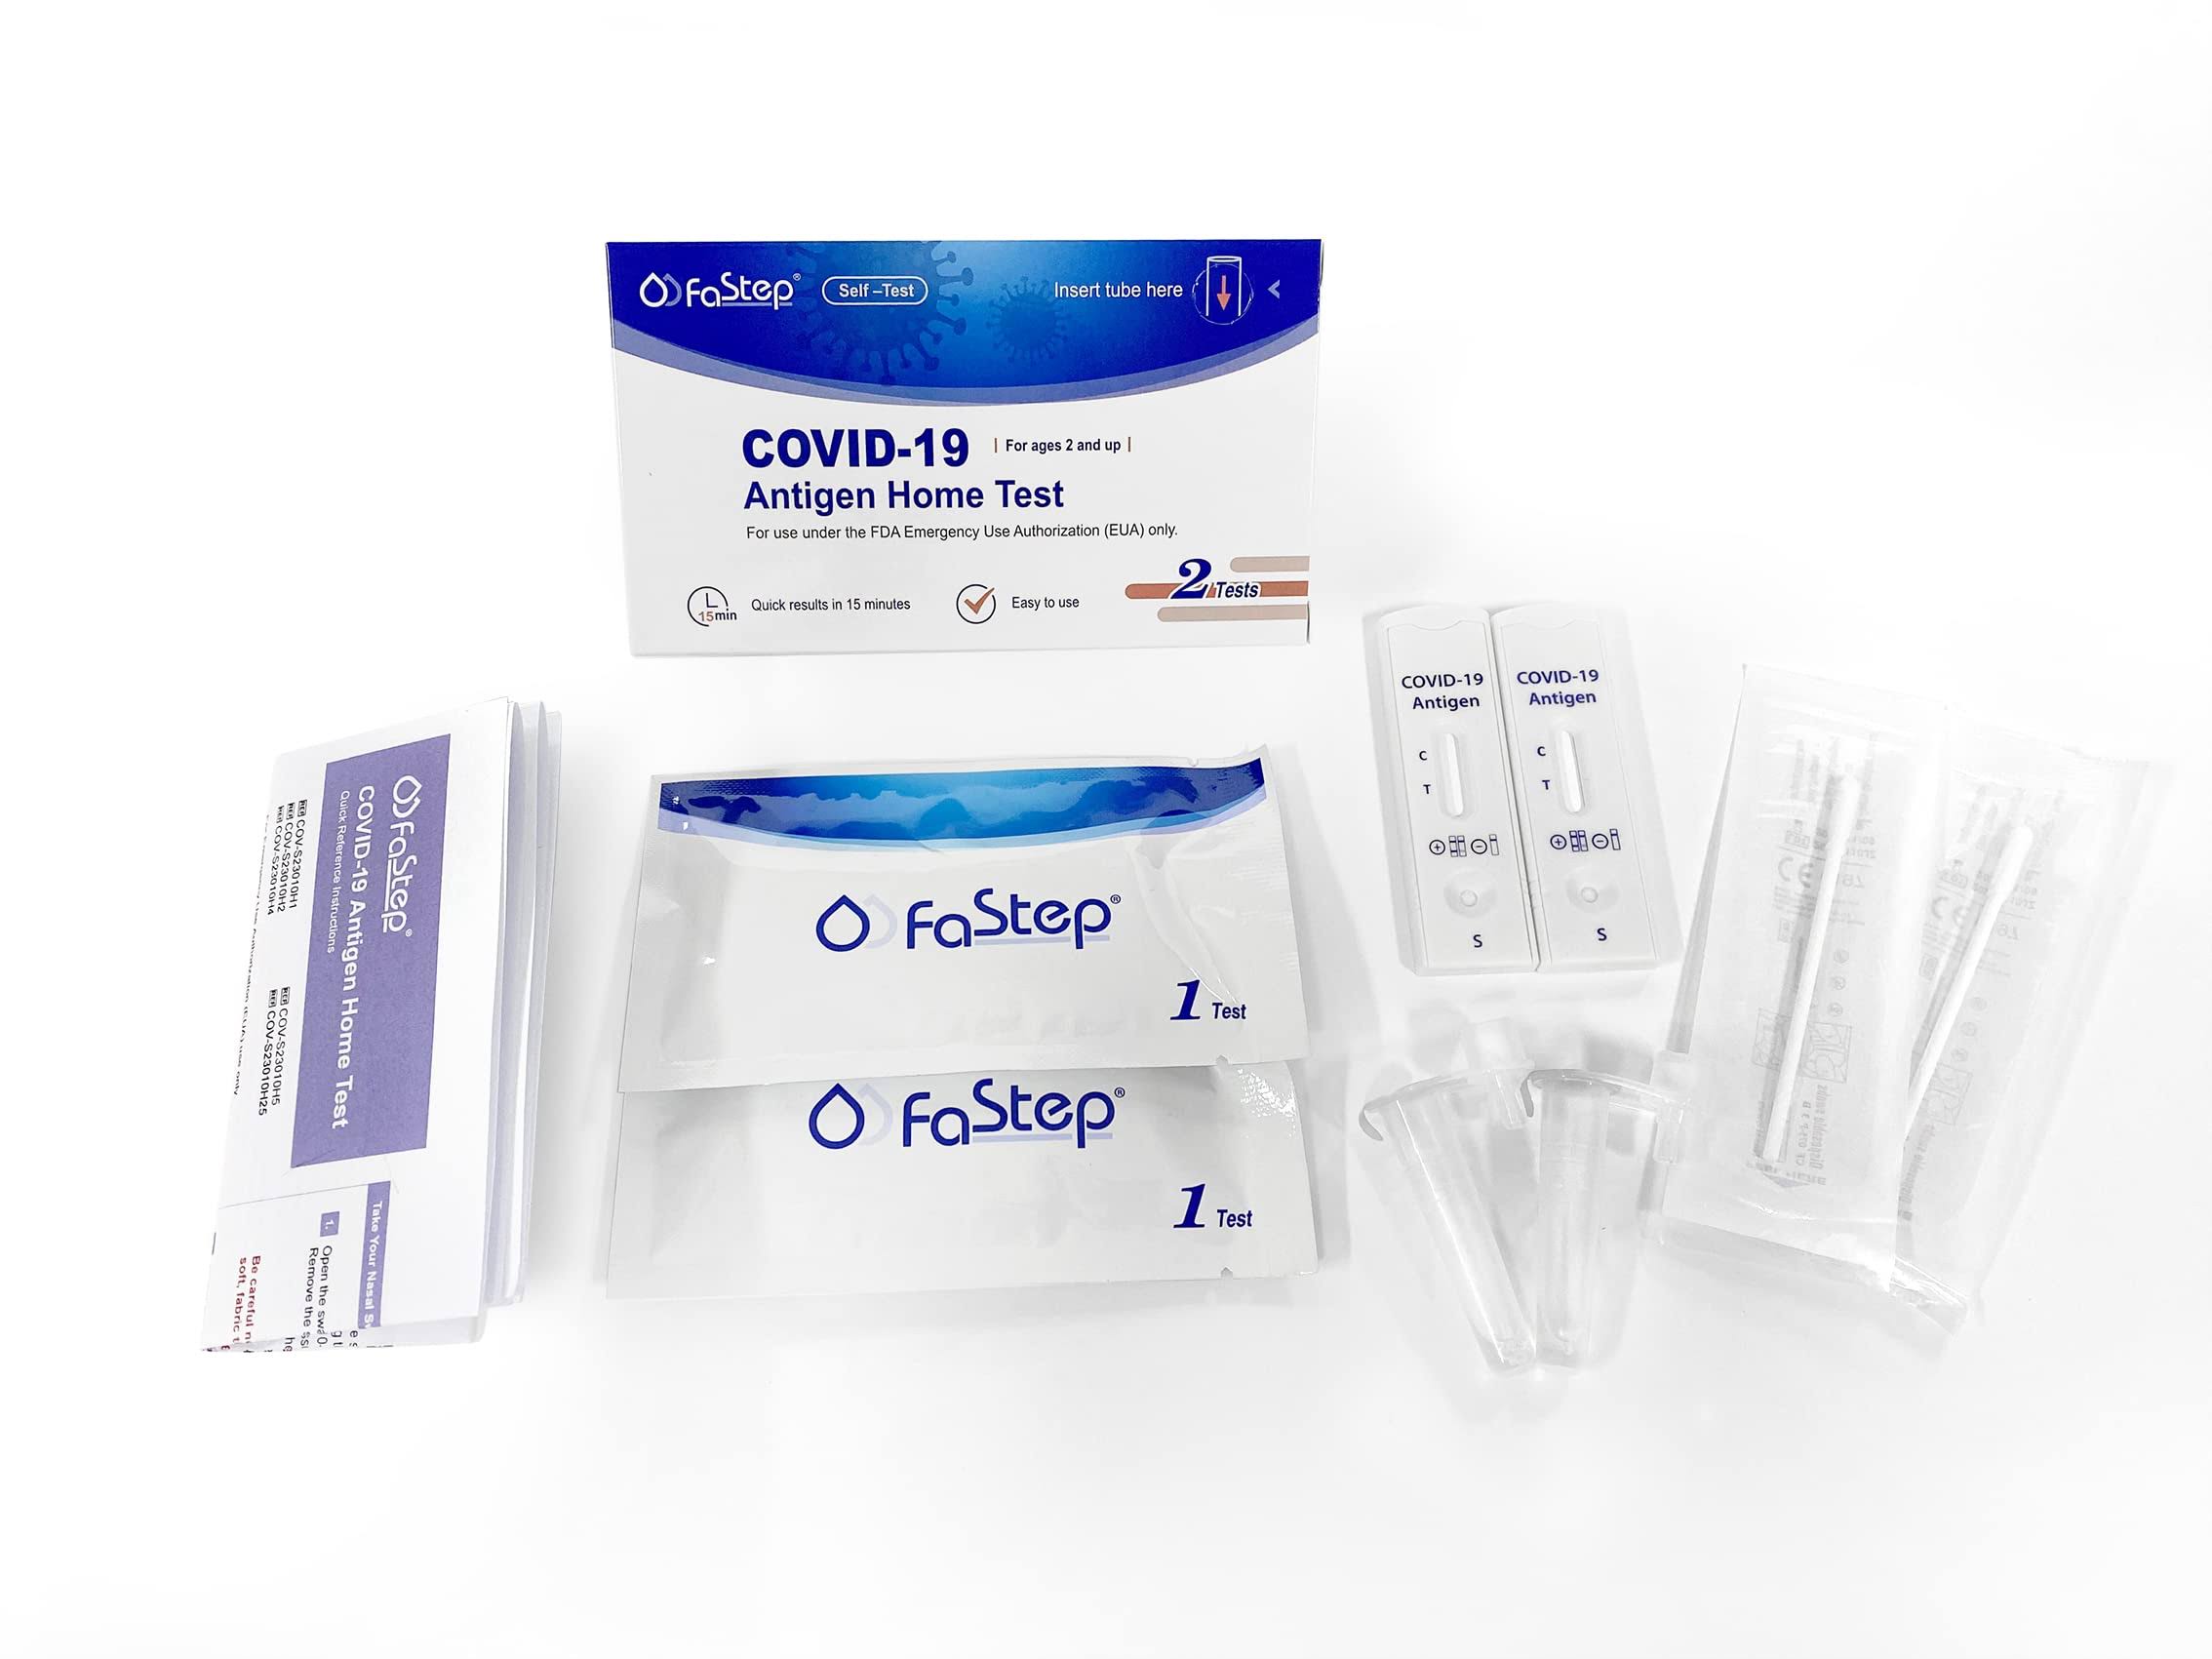 FaStep Rapid 15 Minutes Covid-19 Antigen Home Test (1 Pack, 2 Tests total)